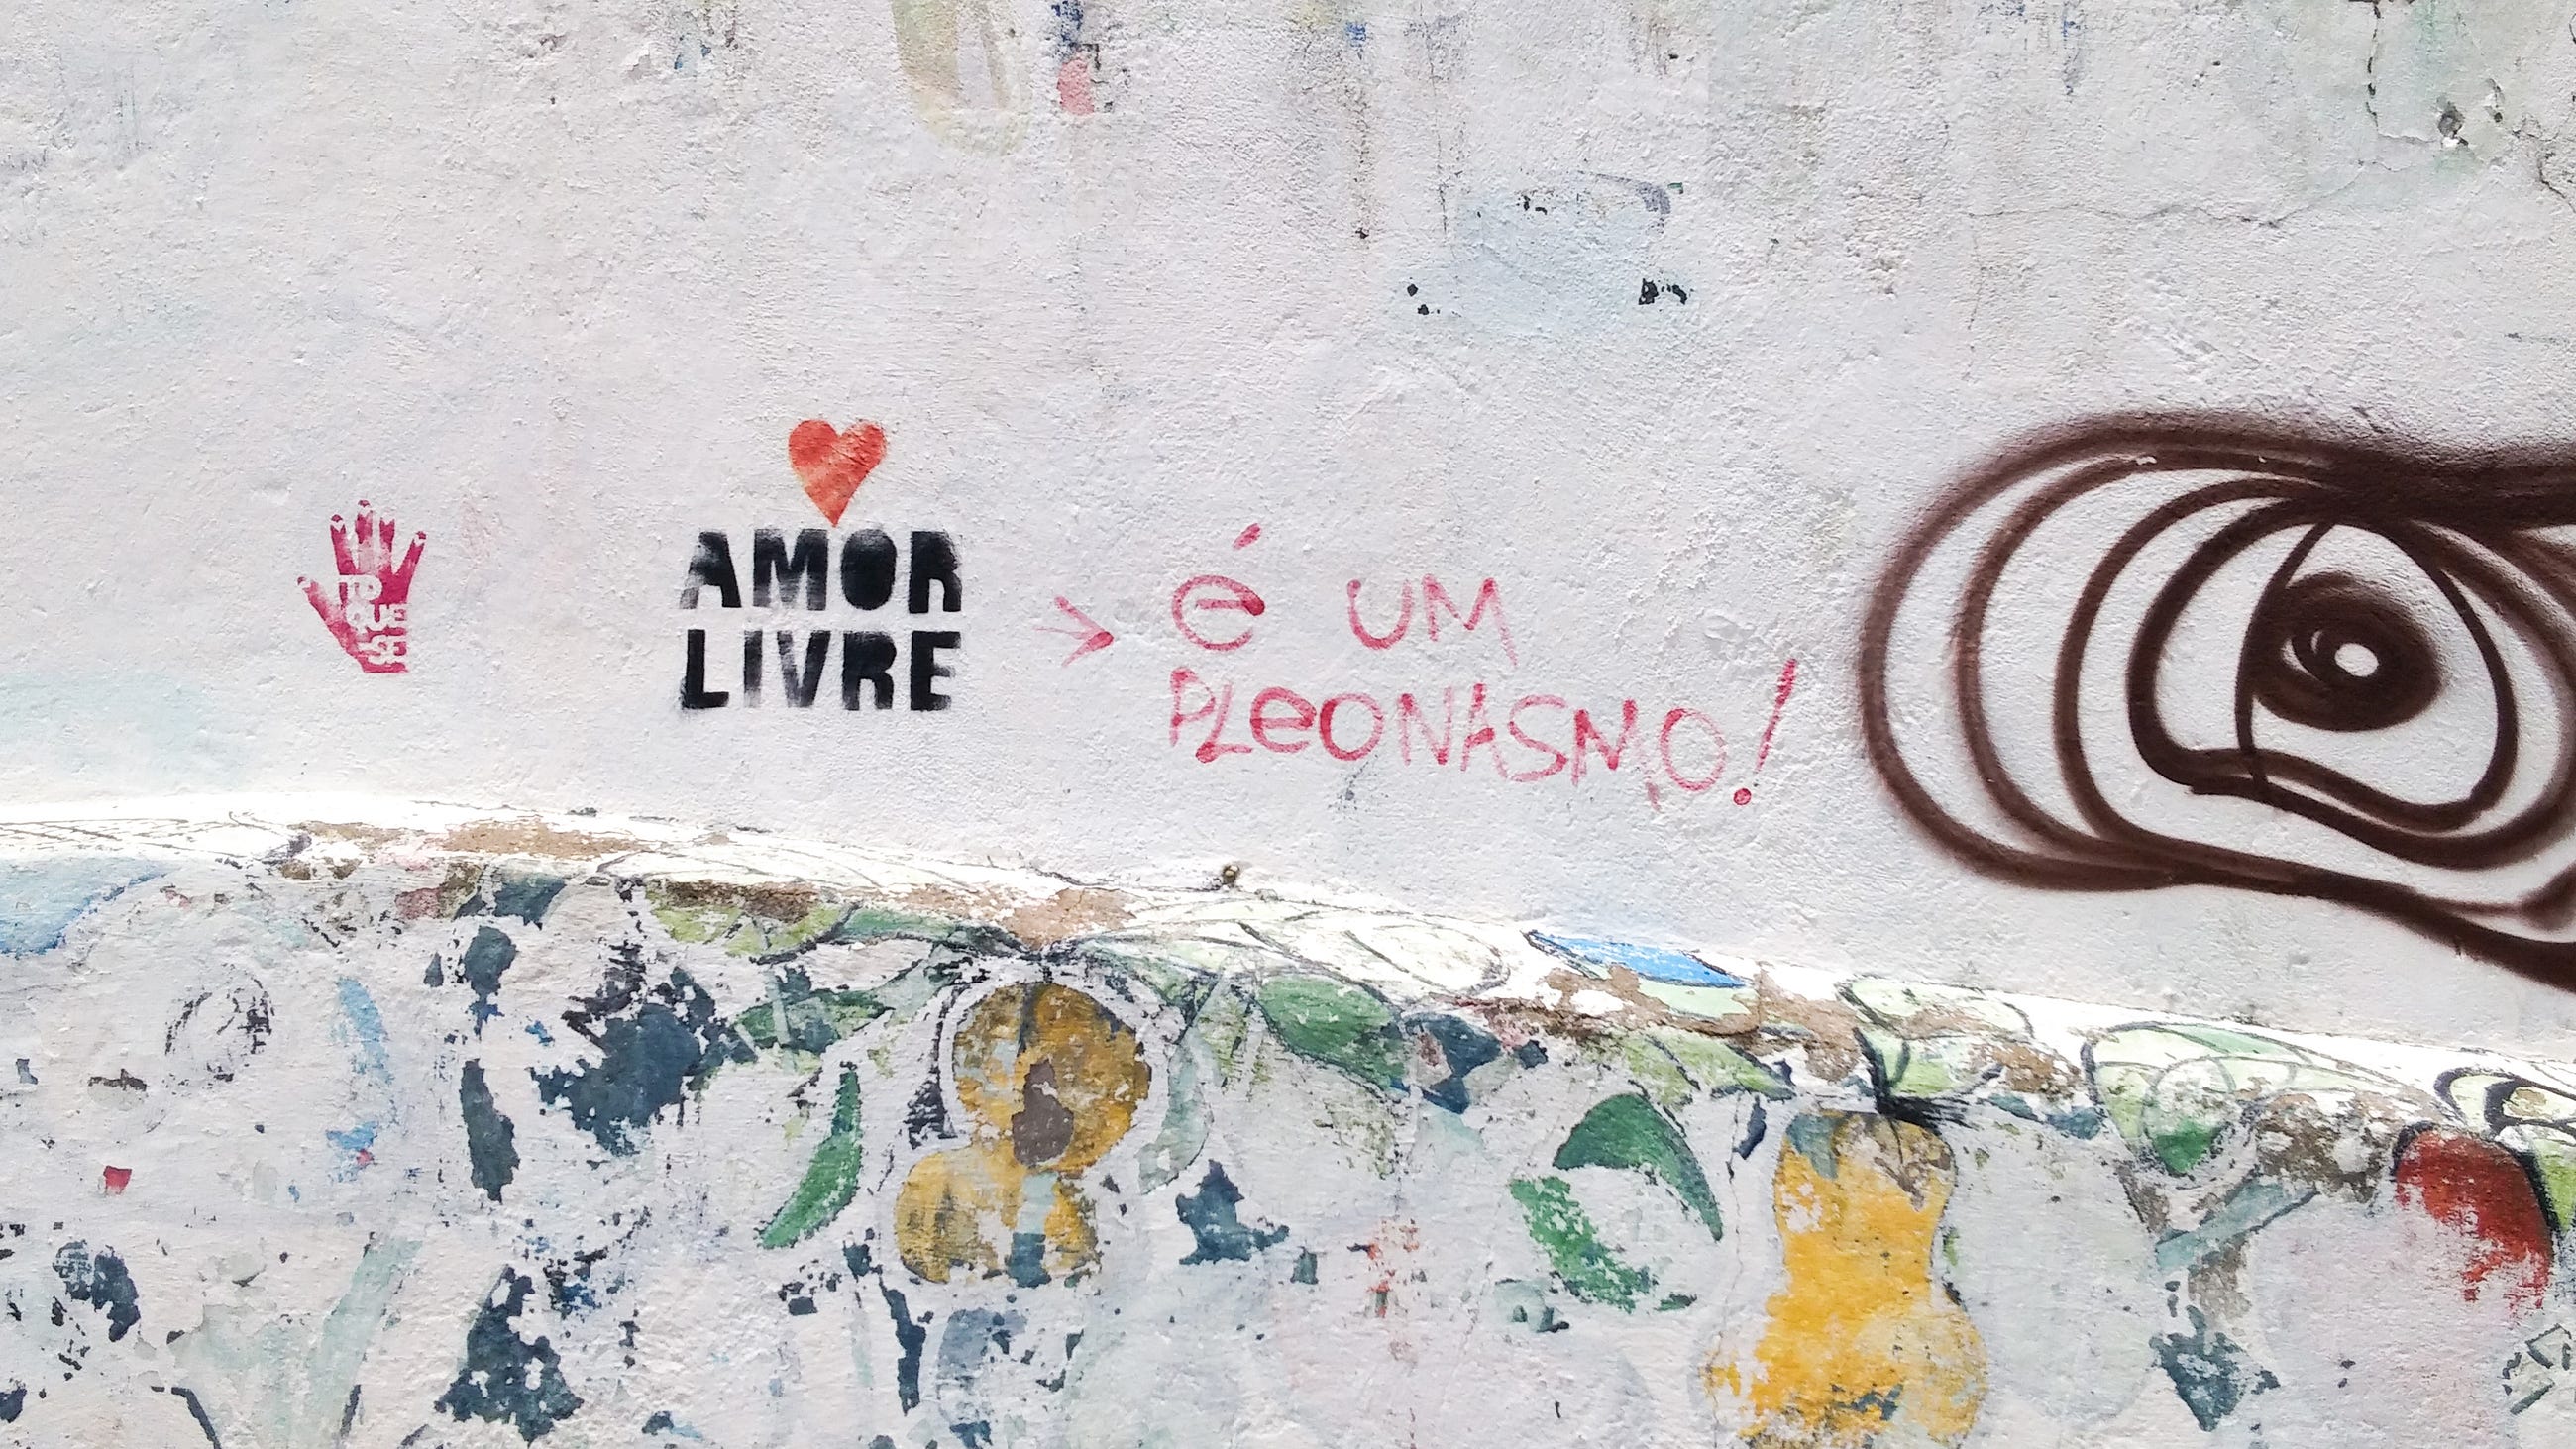 Graffiti Wall - Free Love